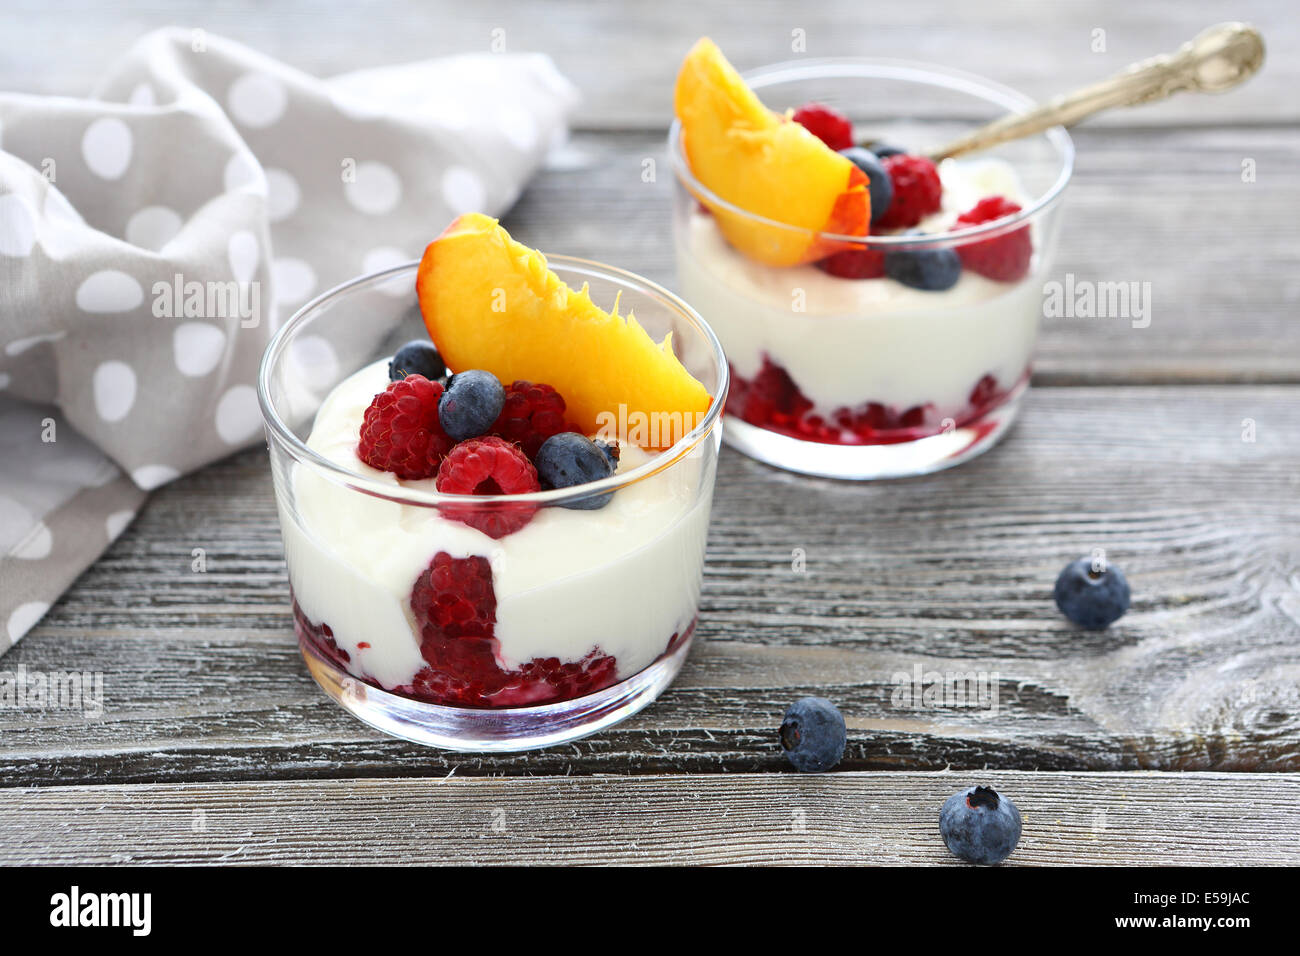 yogurt with fresh berries and peaches, food closeup Stock Photo